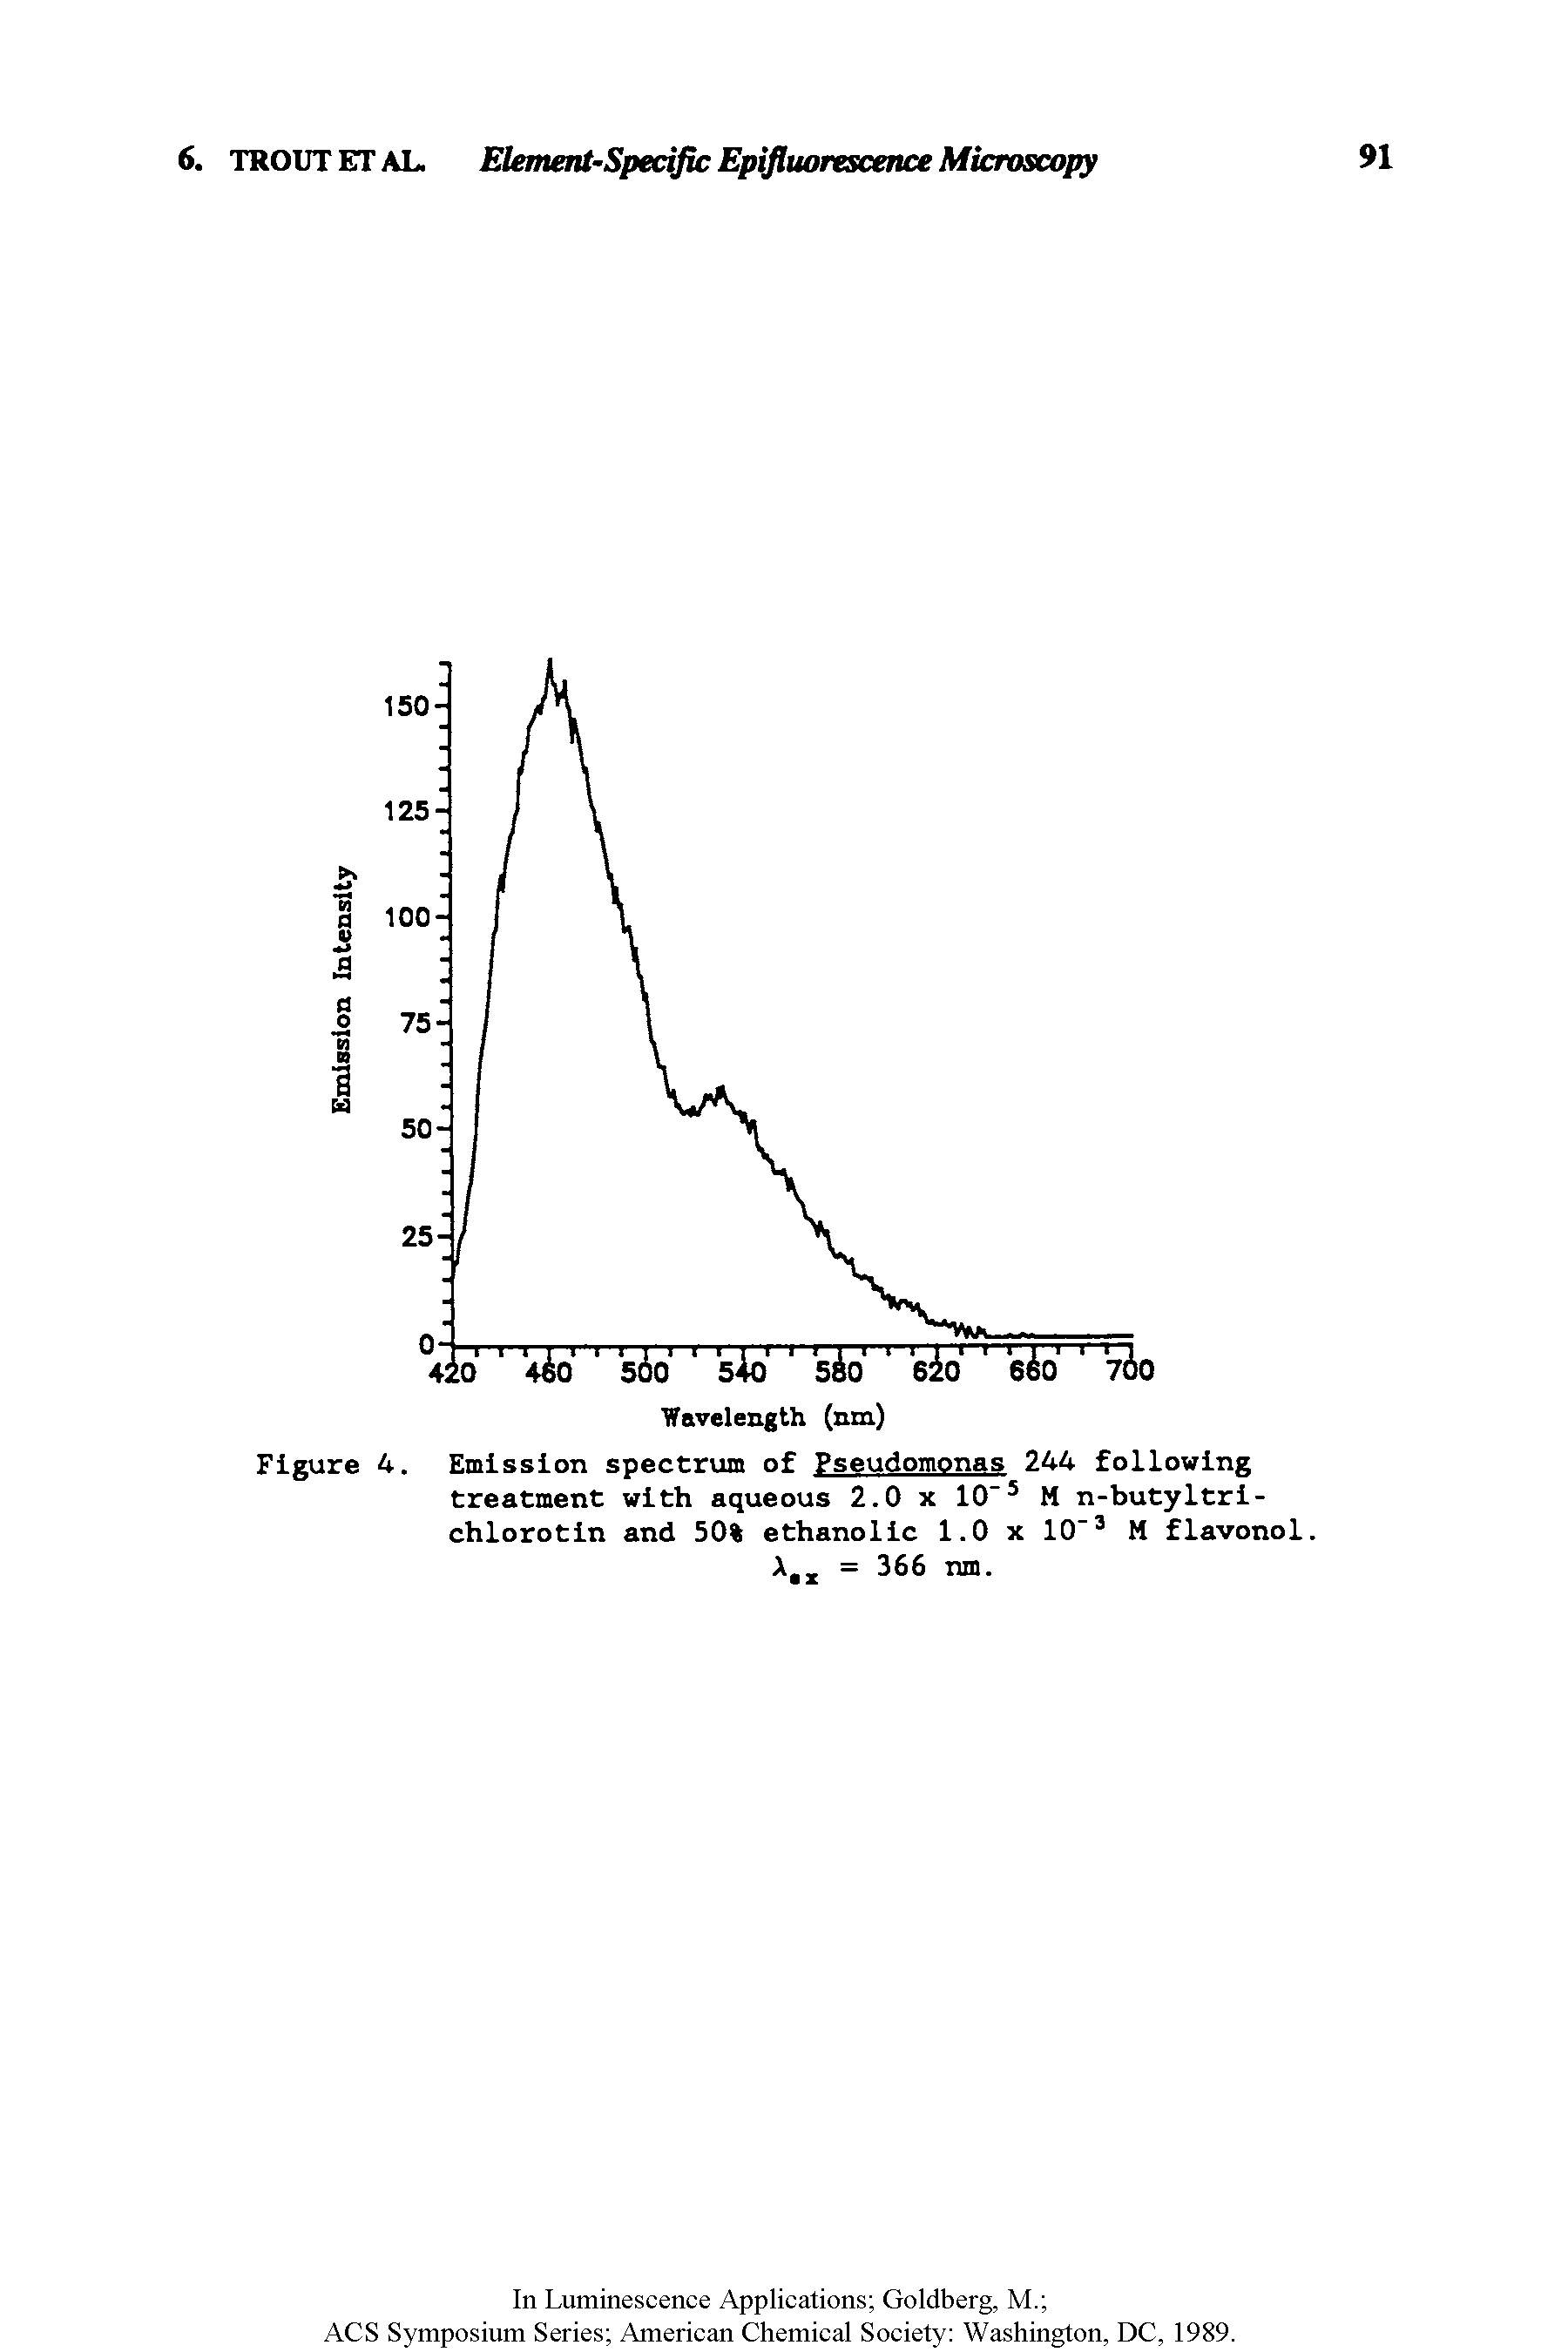 Figure 4. Emission spectrum of Pseudomonas 244 following treatment with aqueous 2.0 x 10" M n-butyltri-chlorotin and 50% ethanolic 1.0 x 10" M flavonol.